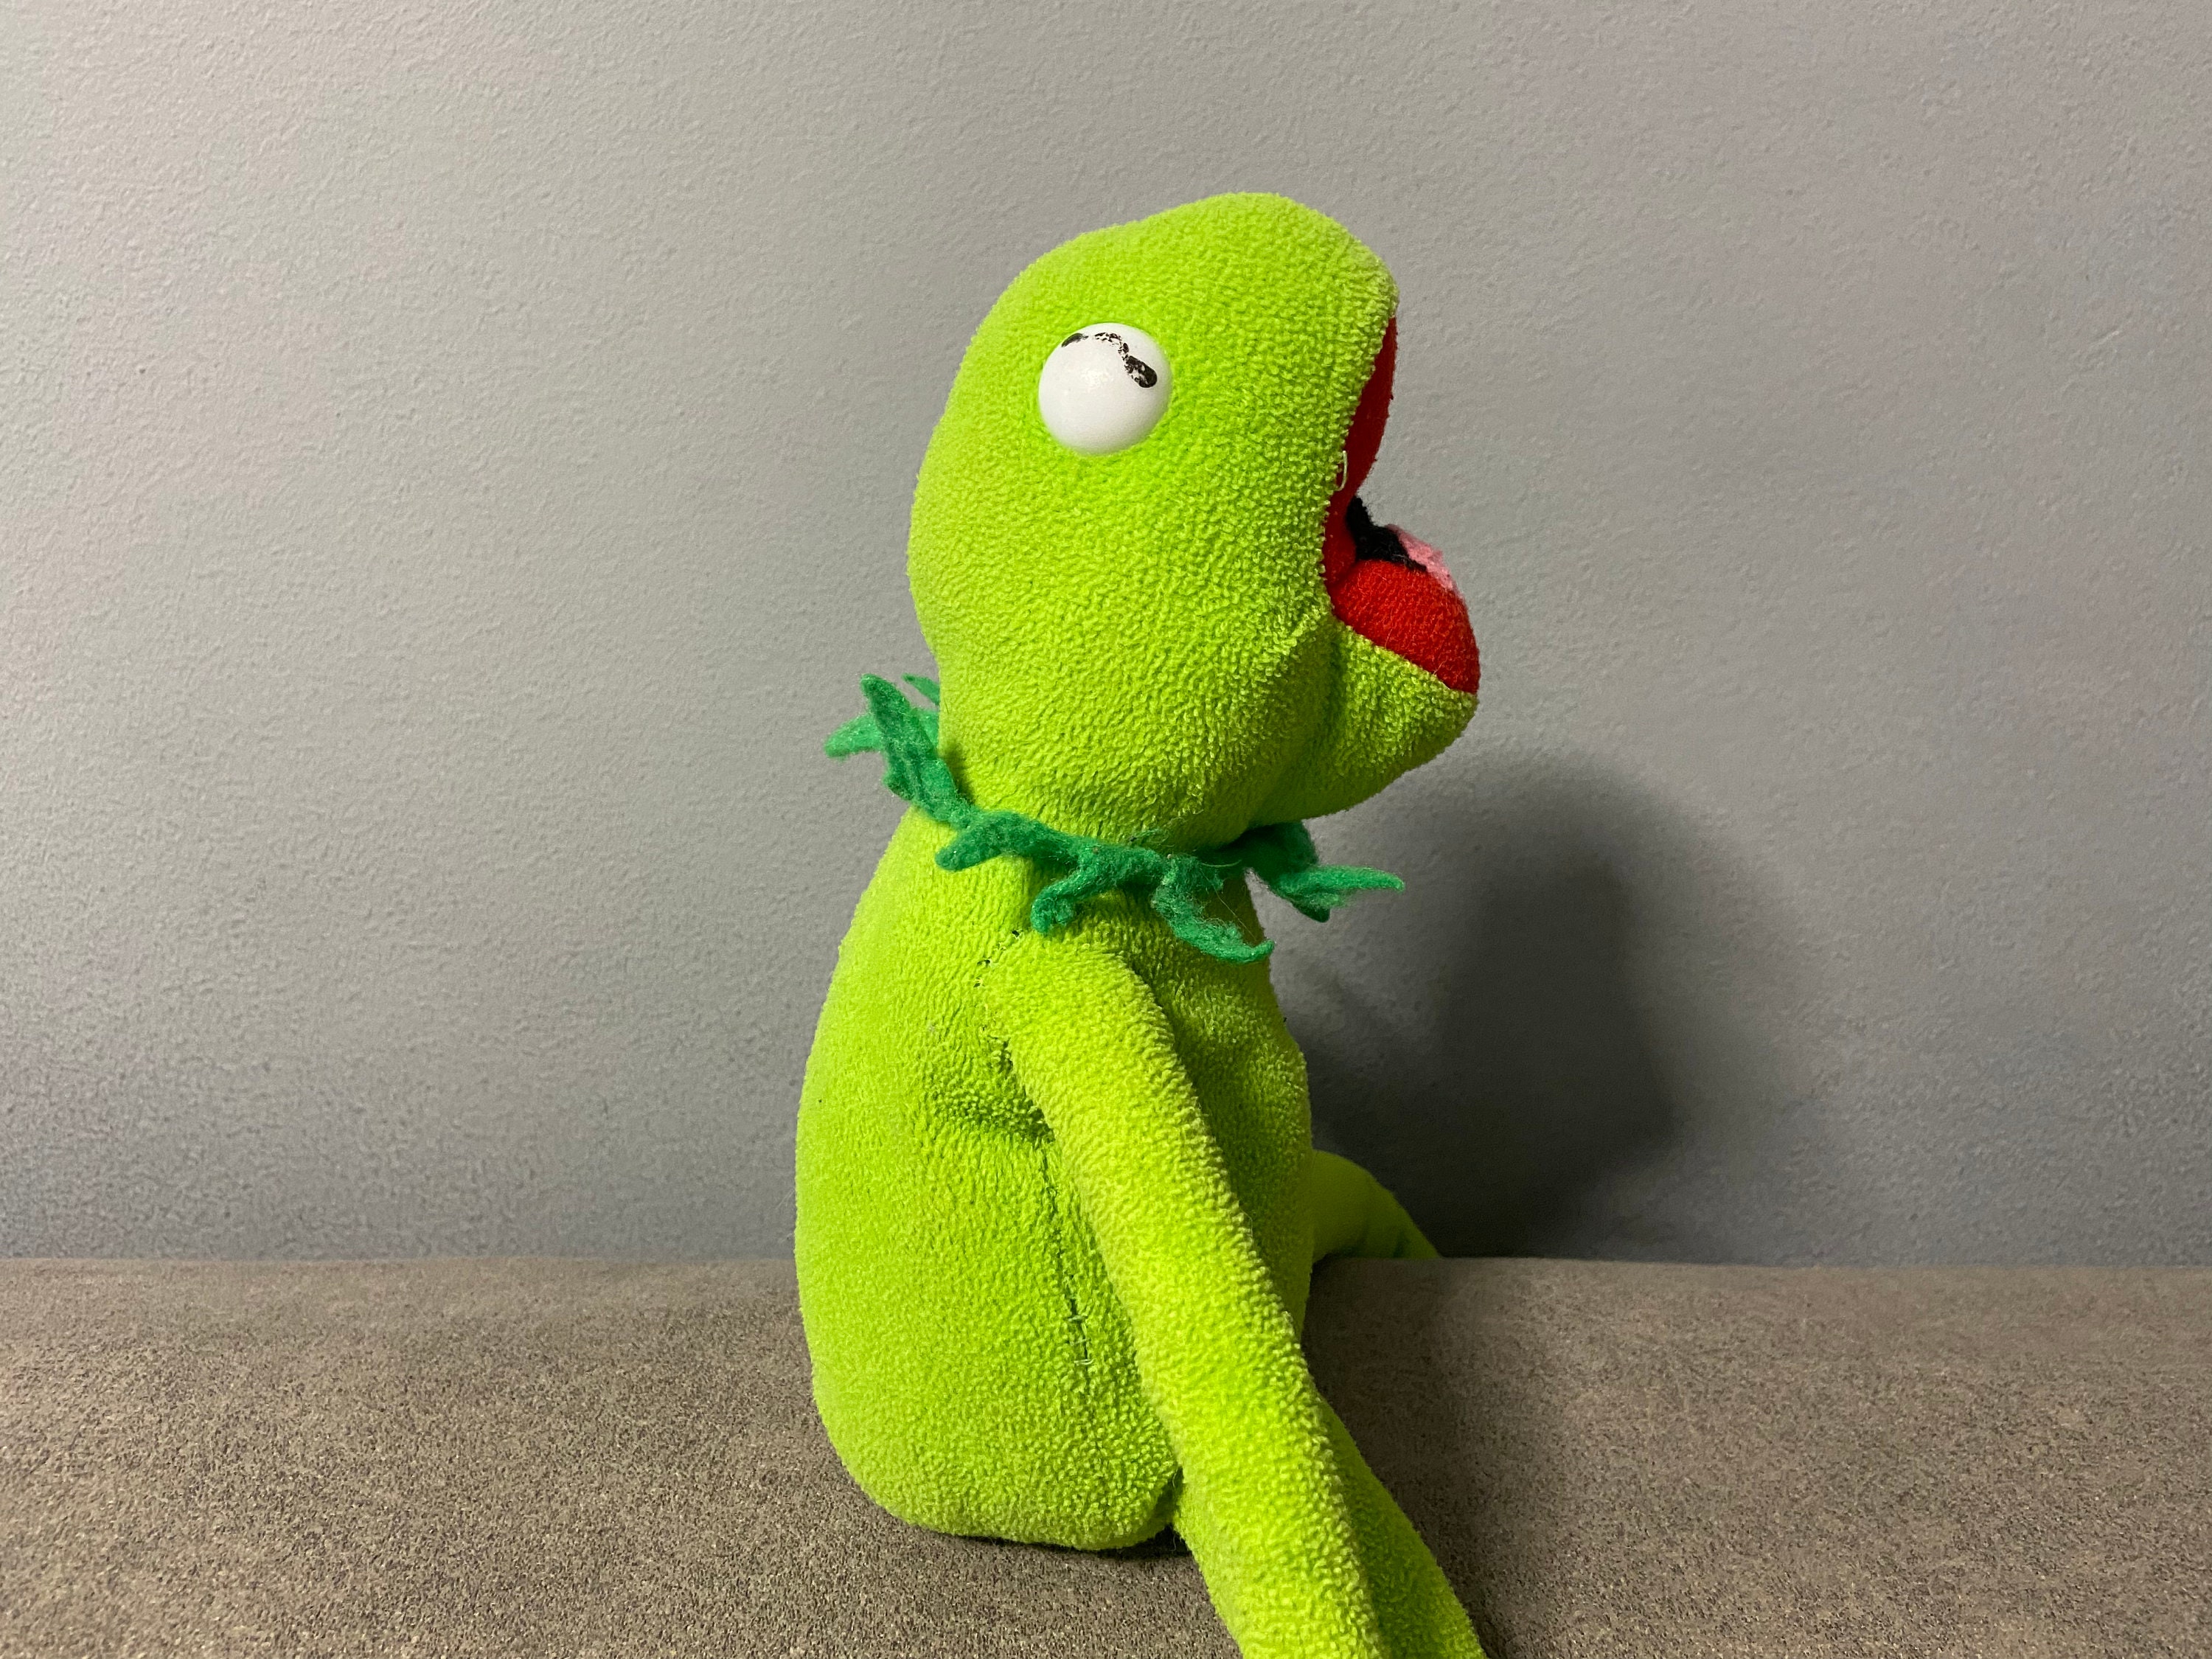 Pantoufle Peluche Kermit la grenouille - Enjouet